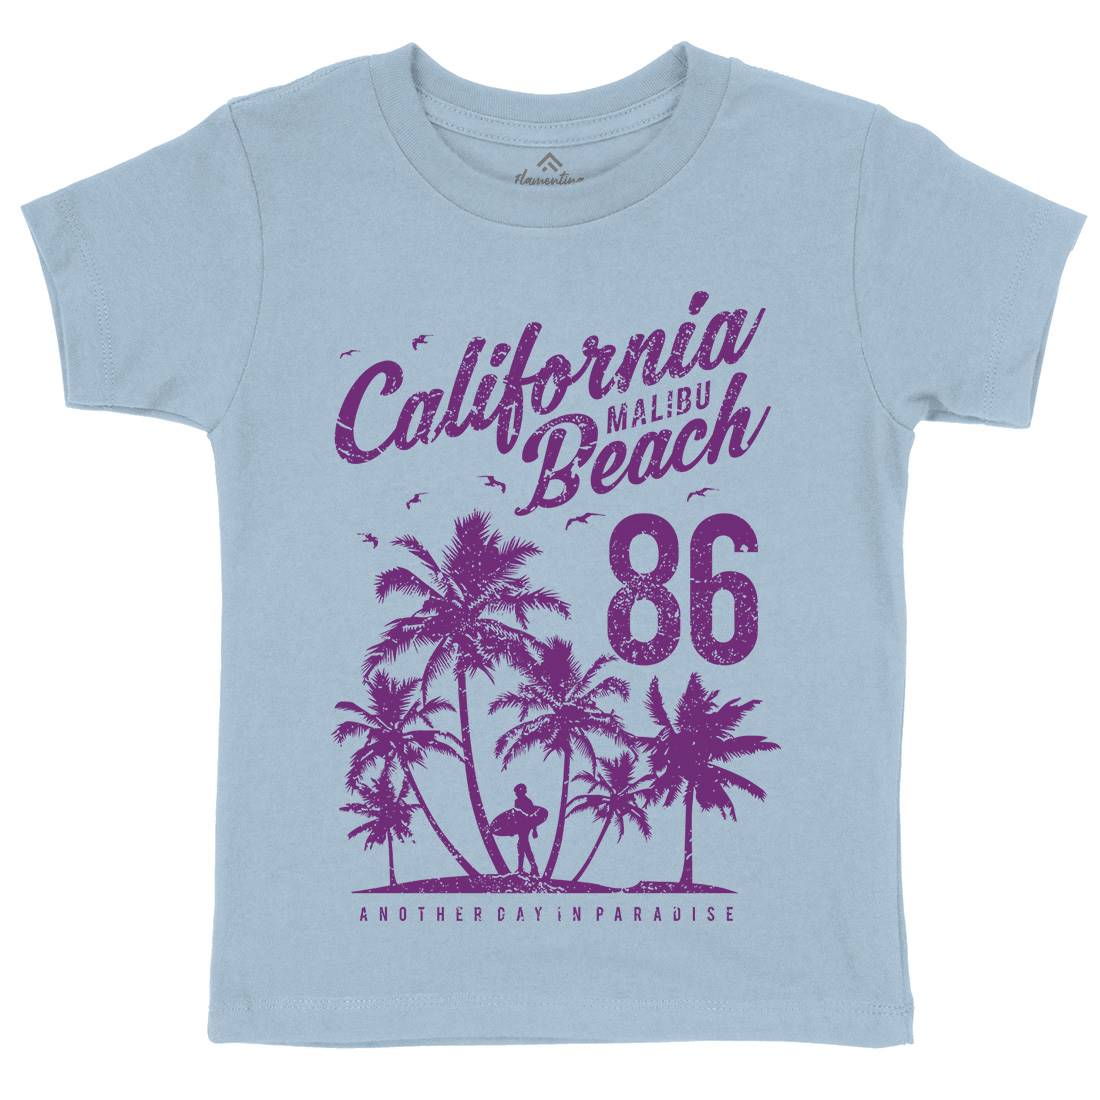 California Malibu Beach Kids Crew Neck T-Shirt Surf A630